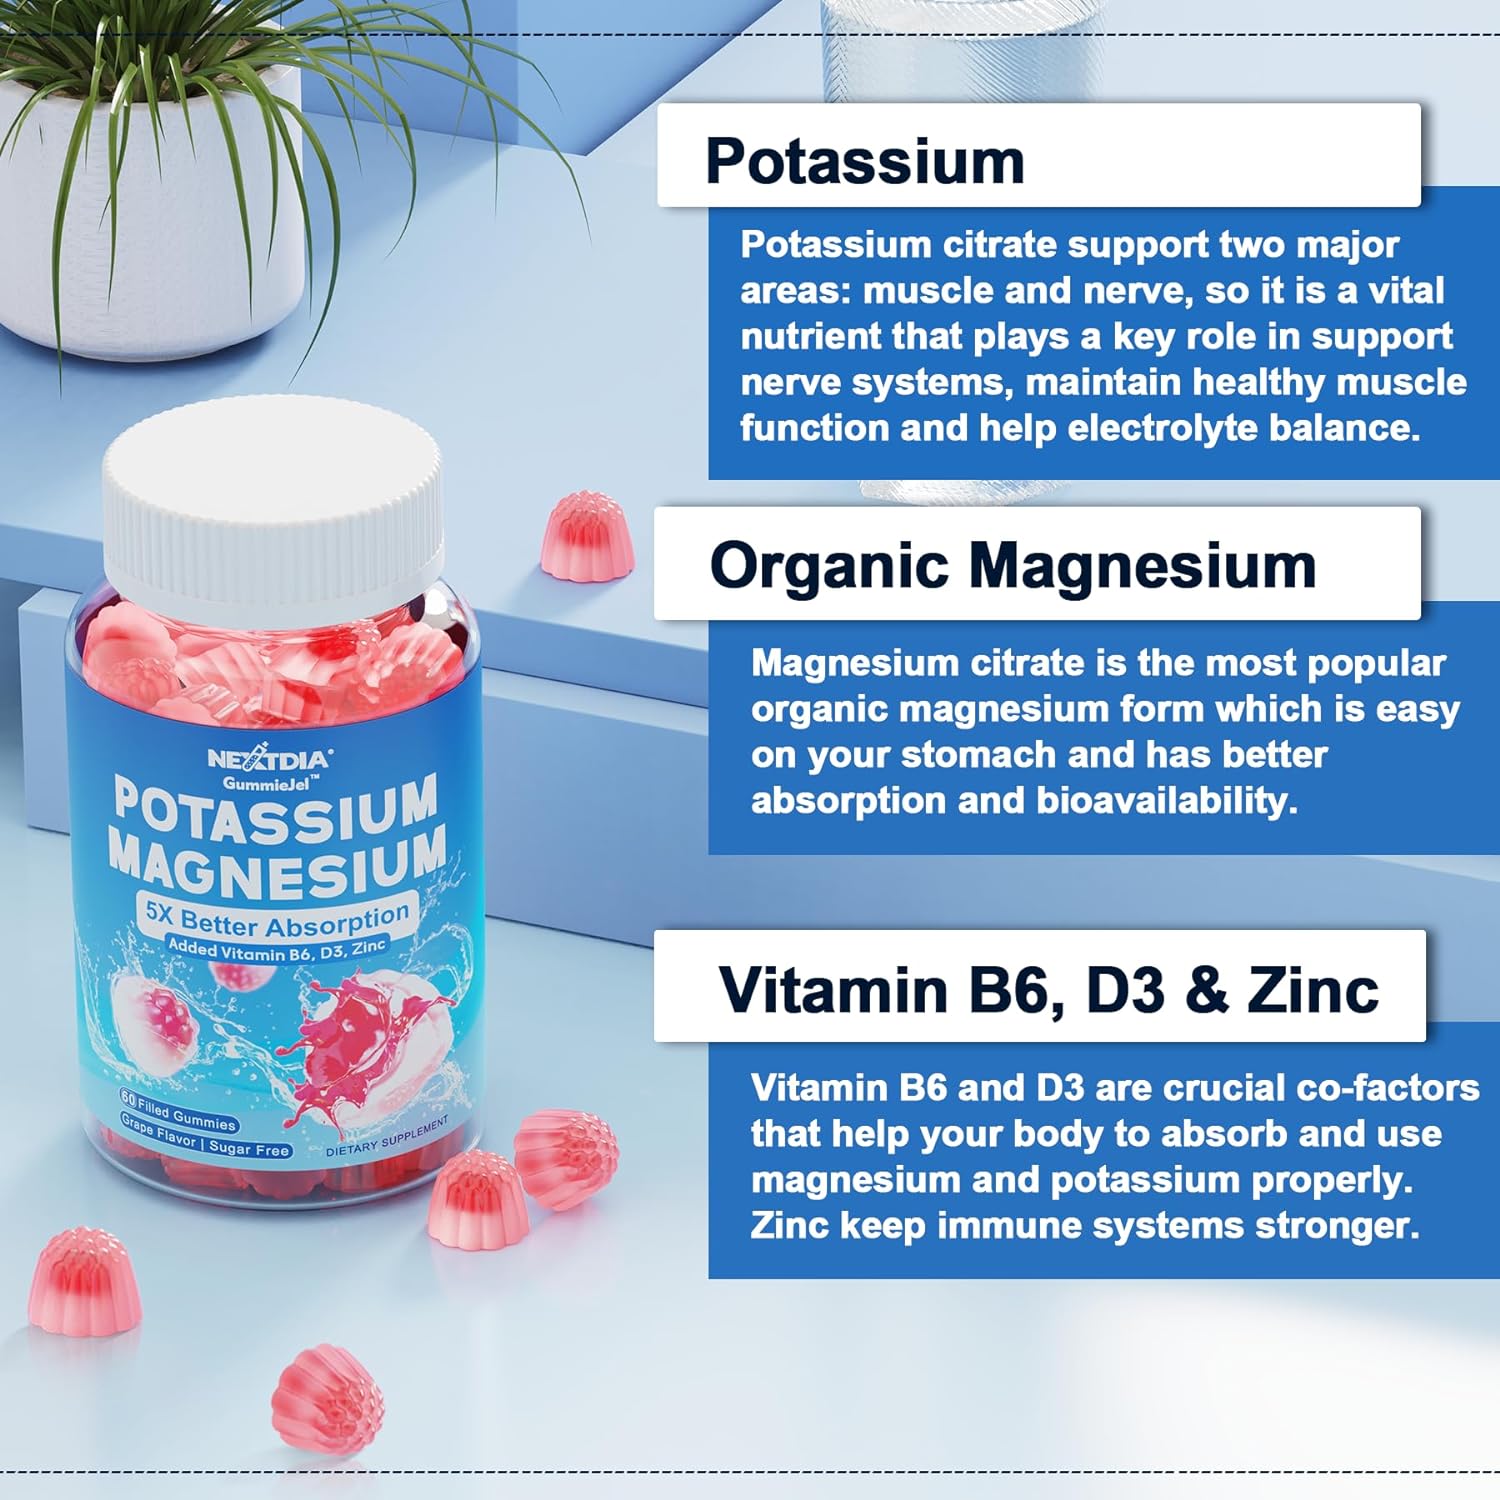 Sugar Free Potassium Magnesium Filled Gummies, 5x Better Absorption, Potassium Citrate 99mg Magnesium Citrate 420mg, D3, B6 & Zinc, for Leg Cramps & Muscle & Immune Health, Vegan, Grape Flavor, 1 Pack : Health & Household